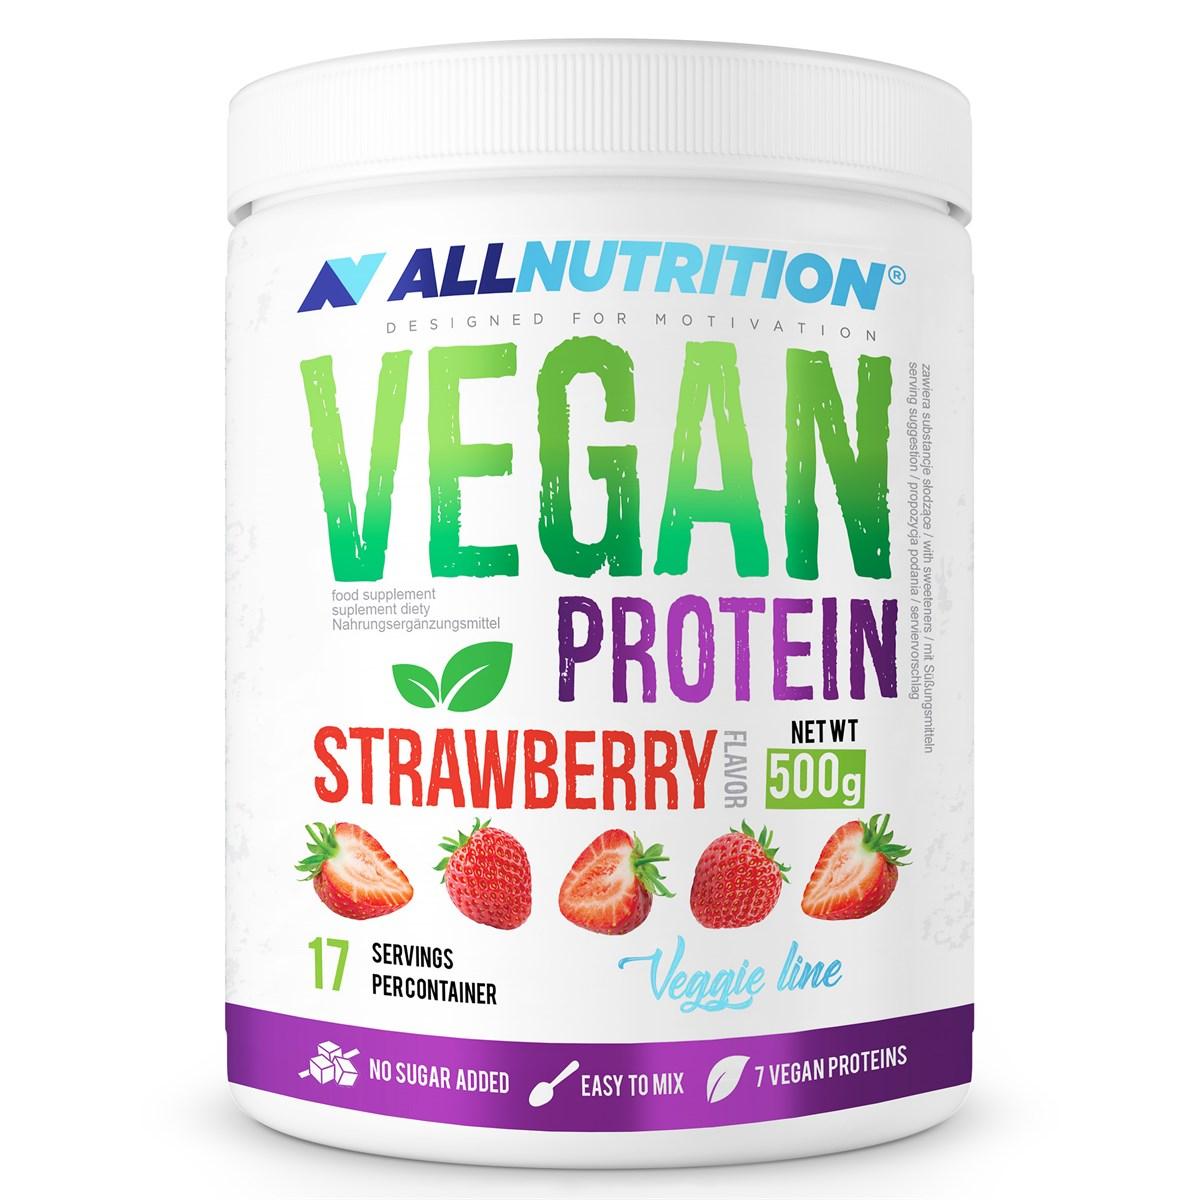 Vegan Pea Protein - 500g Chocolate,  мл, AllNutrition. Растительный протеин. 